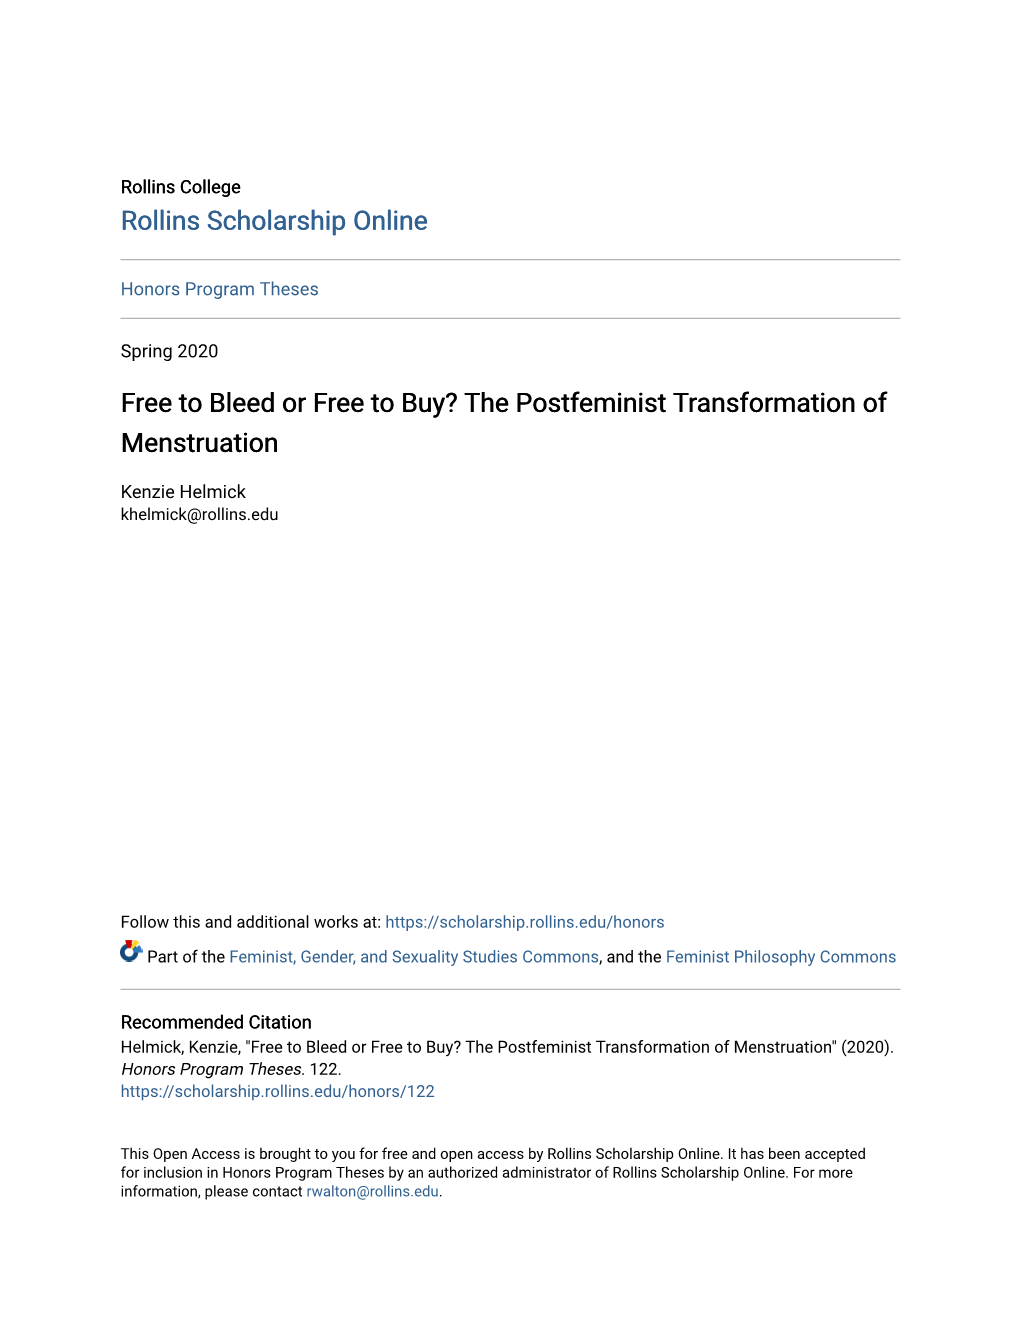 The Postfeminist Transformation of Menstruation